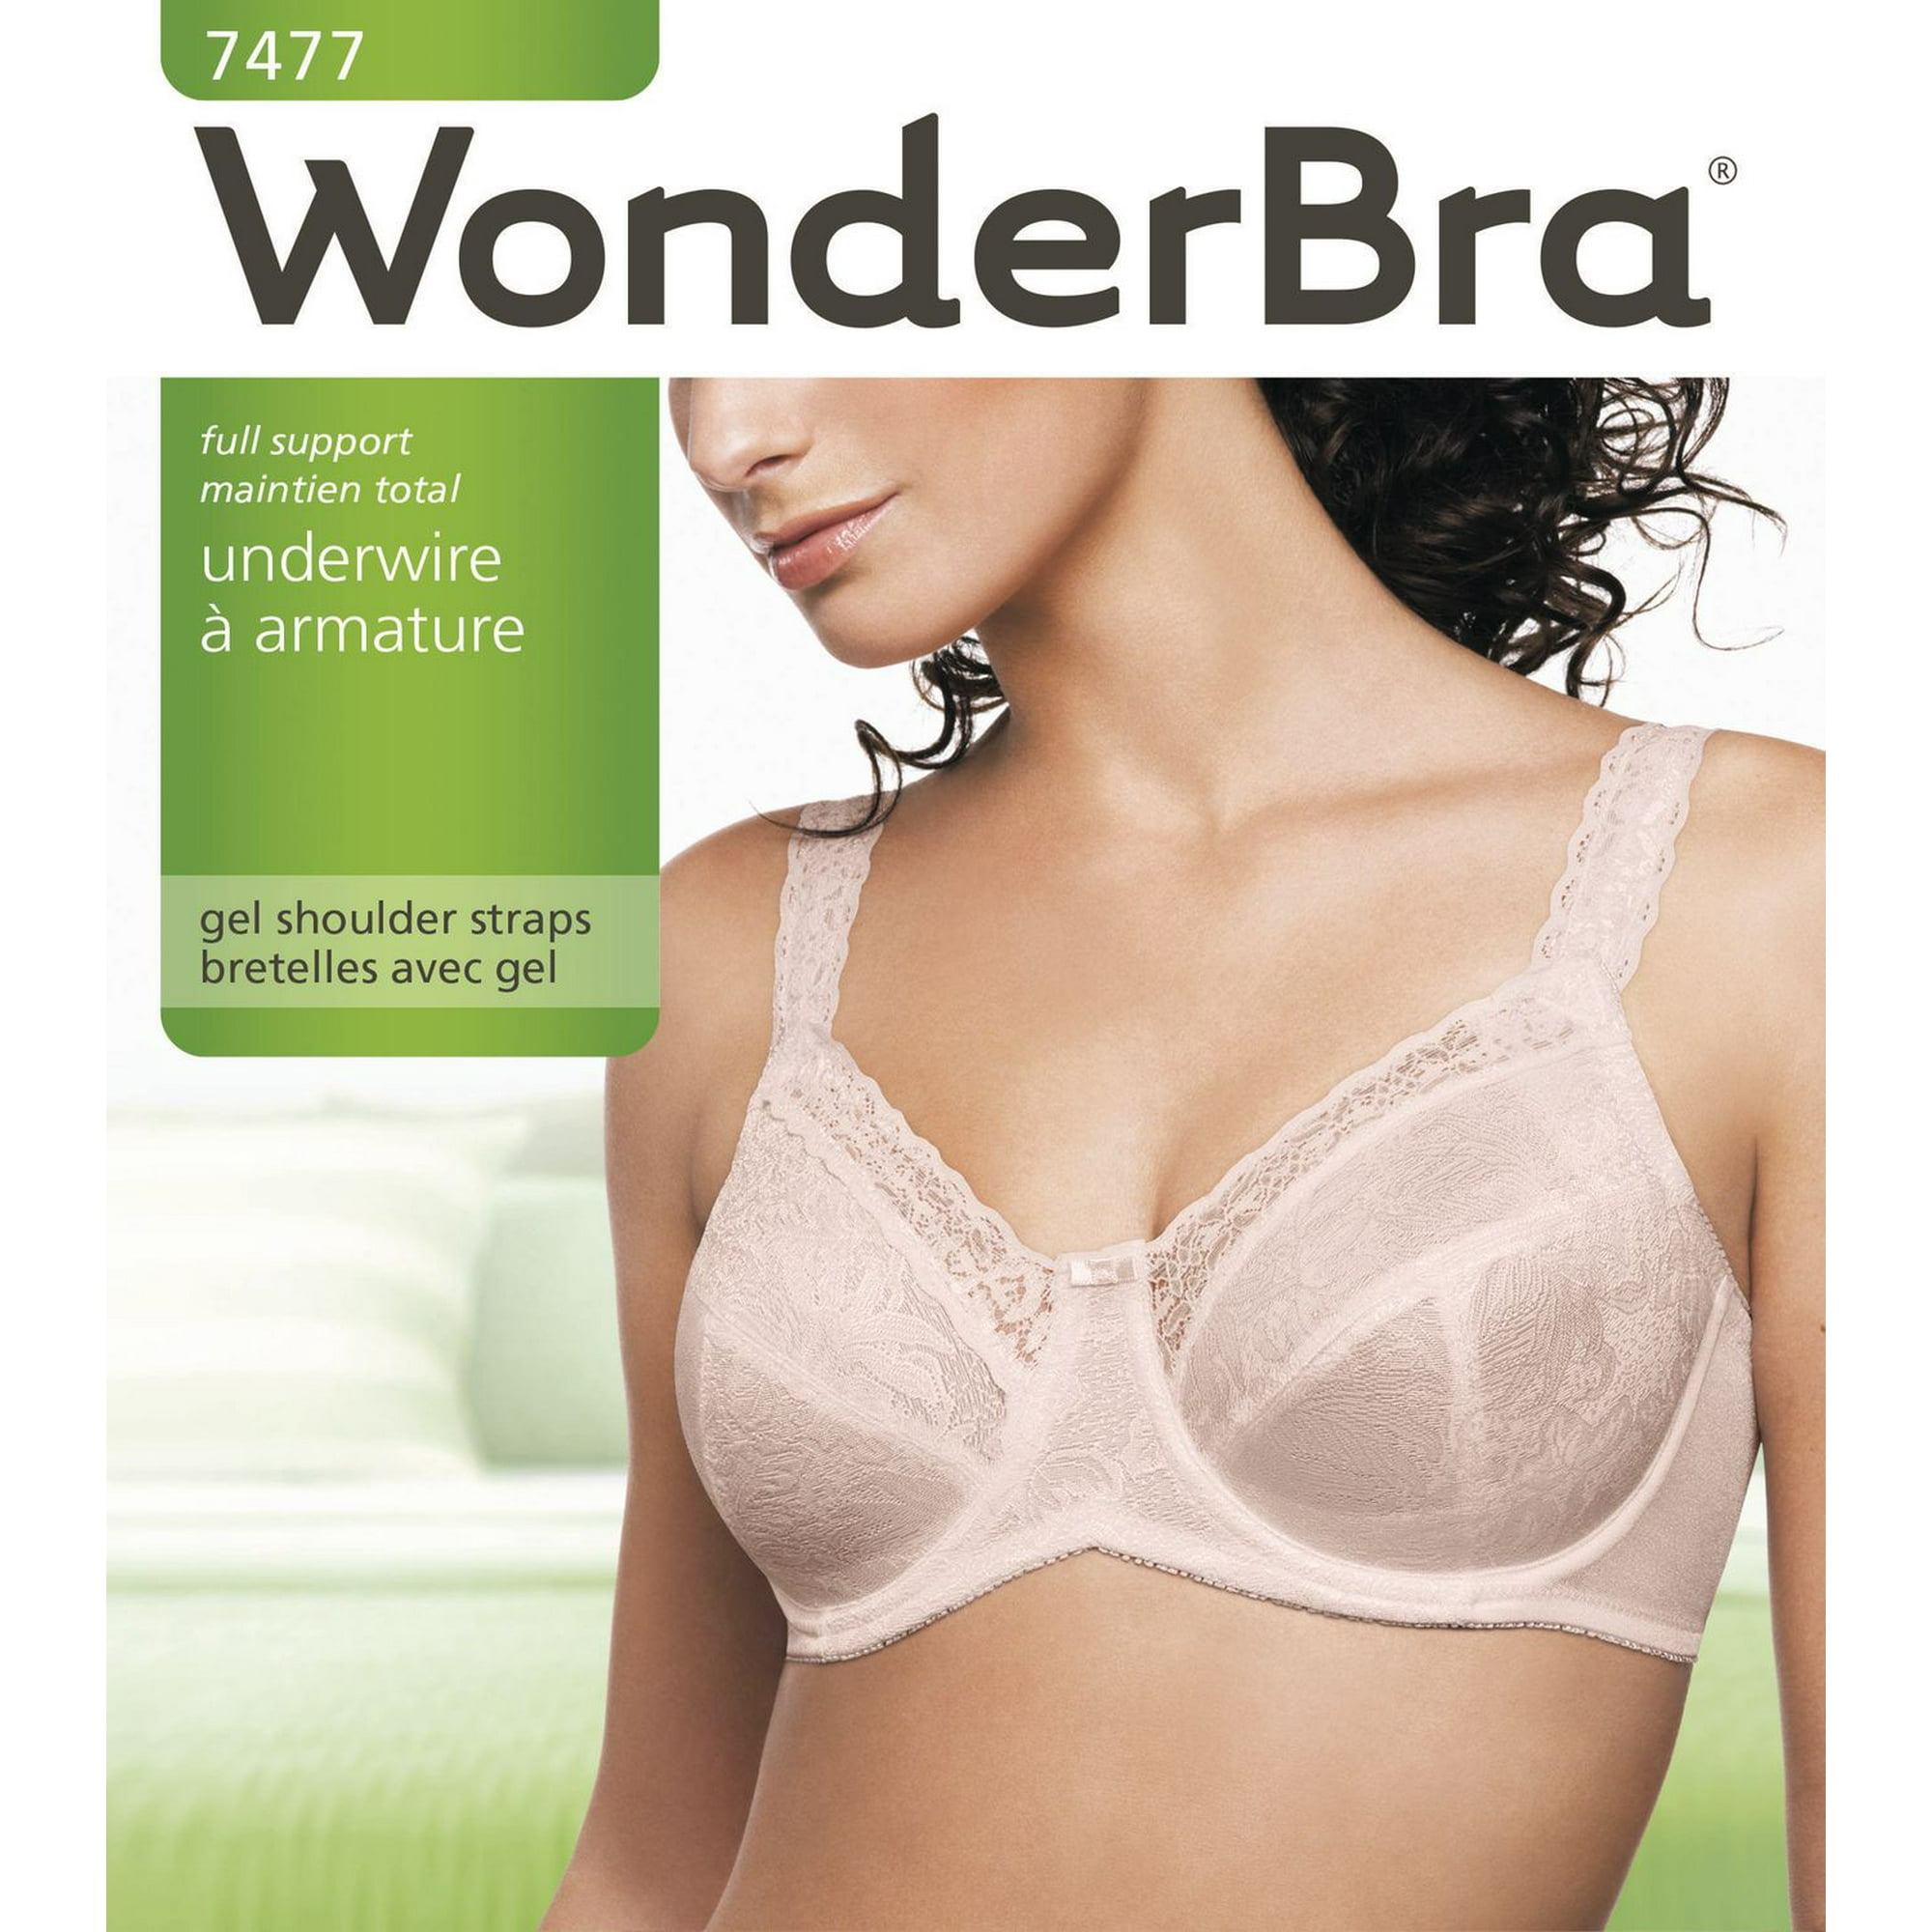 WonderBra Canada - Be your own kind of wonderful®. www.wonderbra.ca